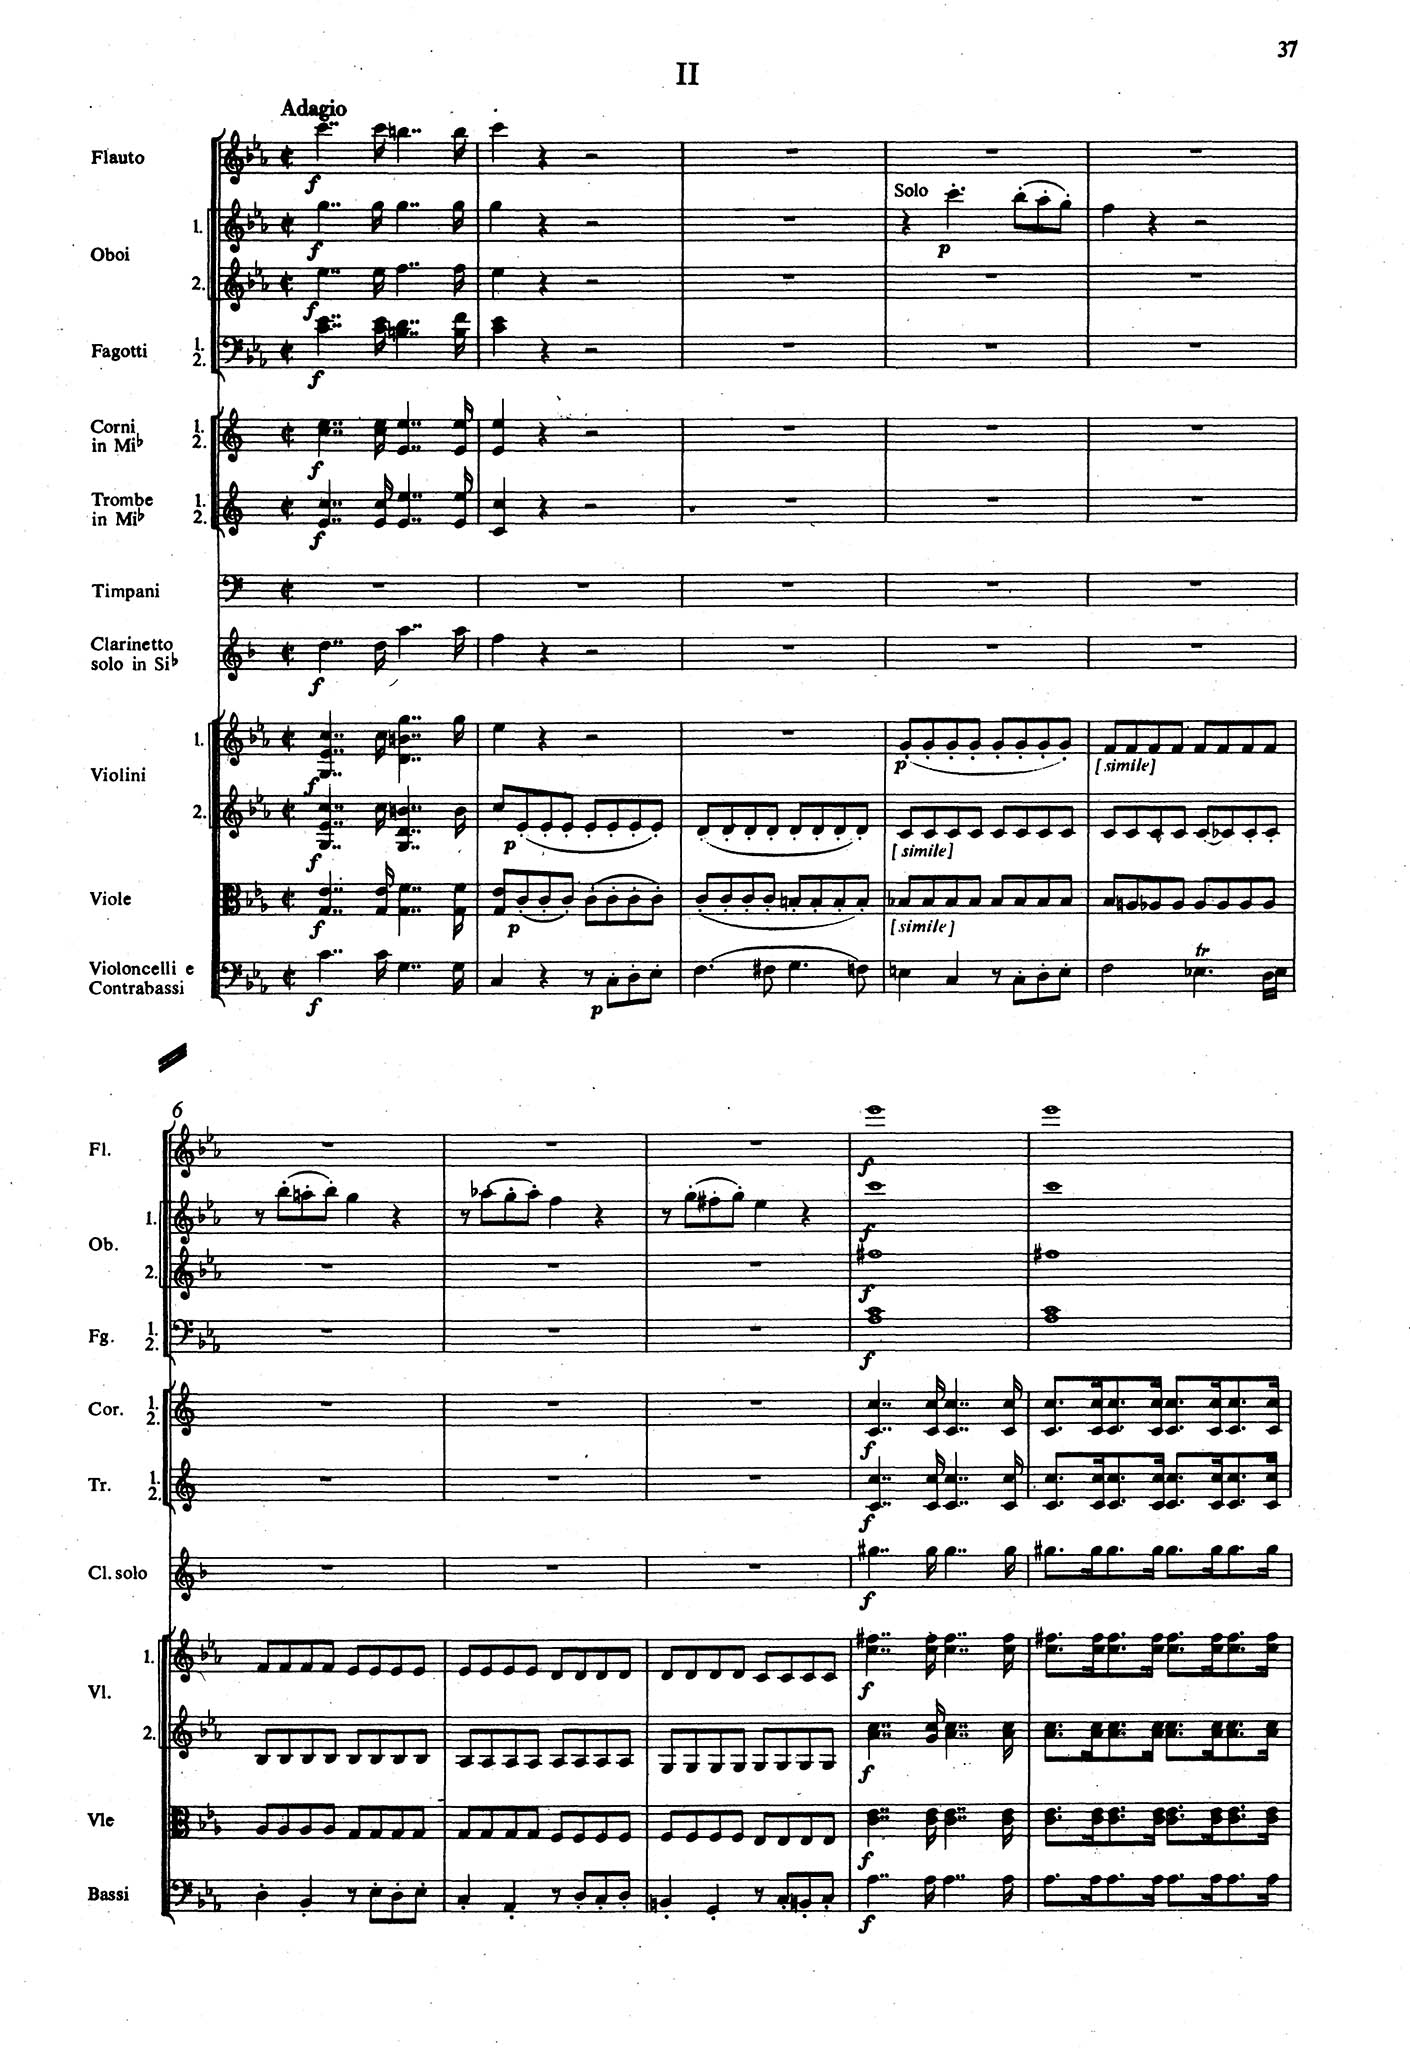 Clarinet Concerto in E-Flat Major, Op. 36 - Movement 2